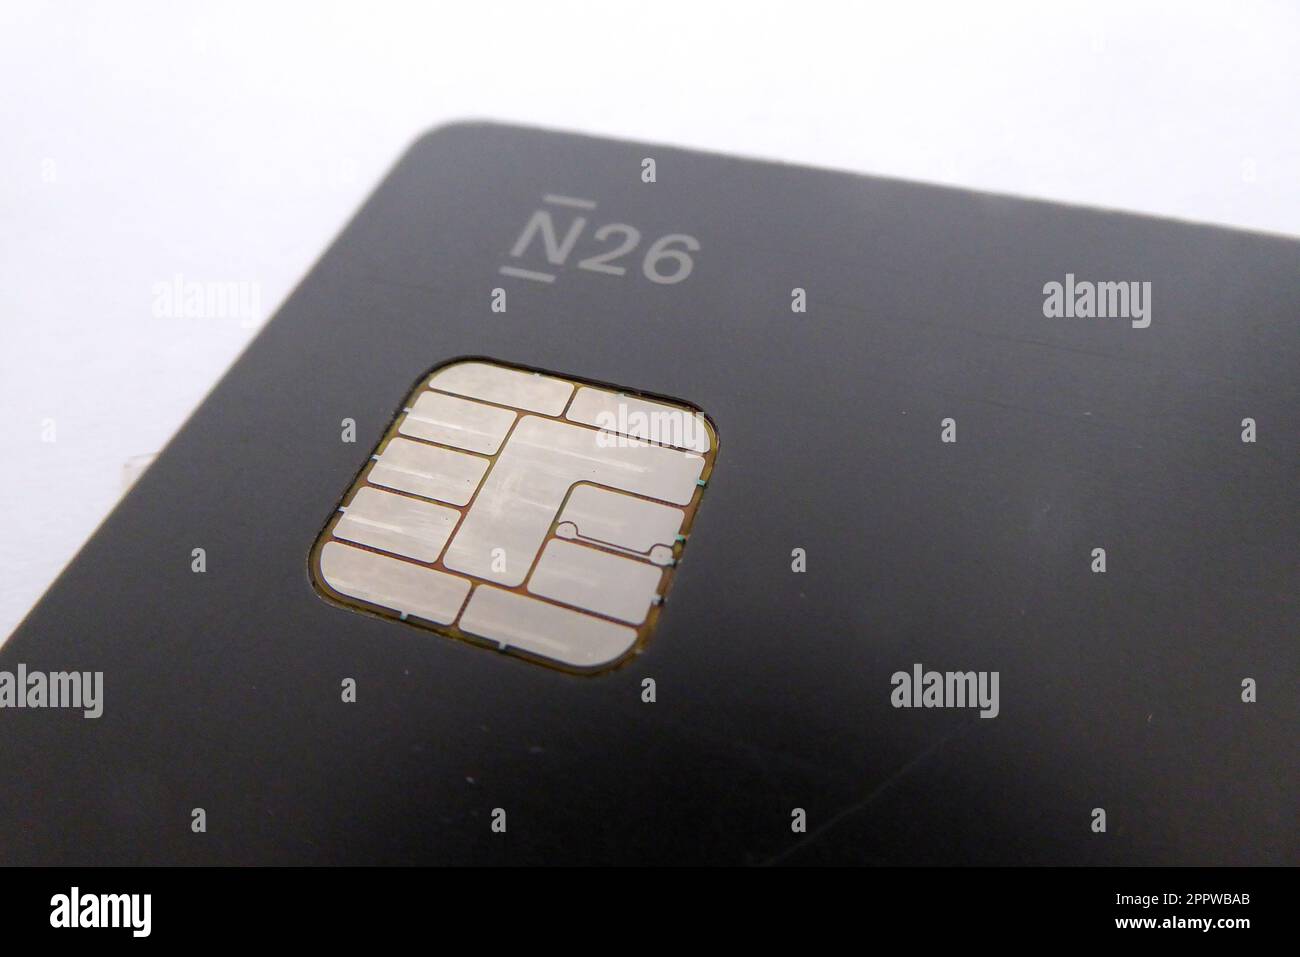 N 26 / Kreditkarte / Credit Card / Online-Bank / Logo / Schriftzug Stock Photo